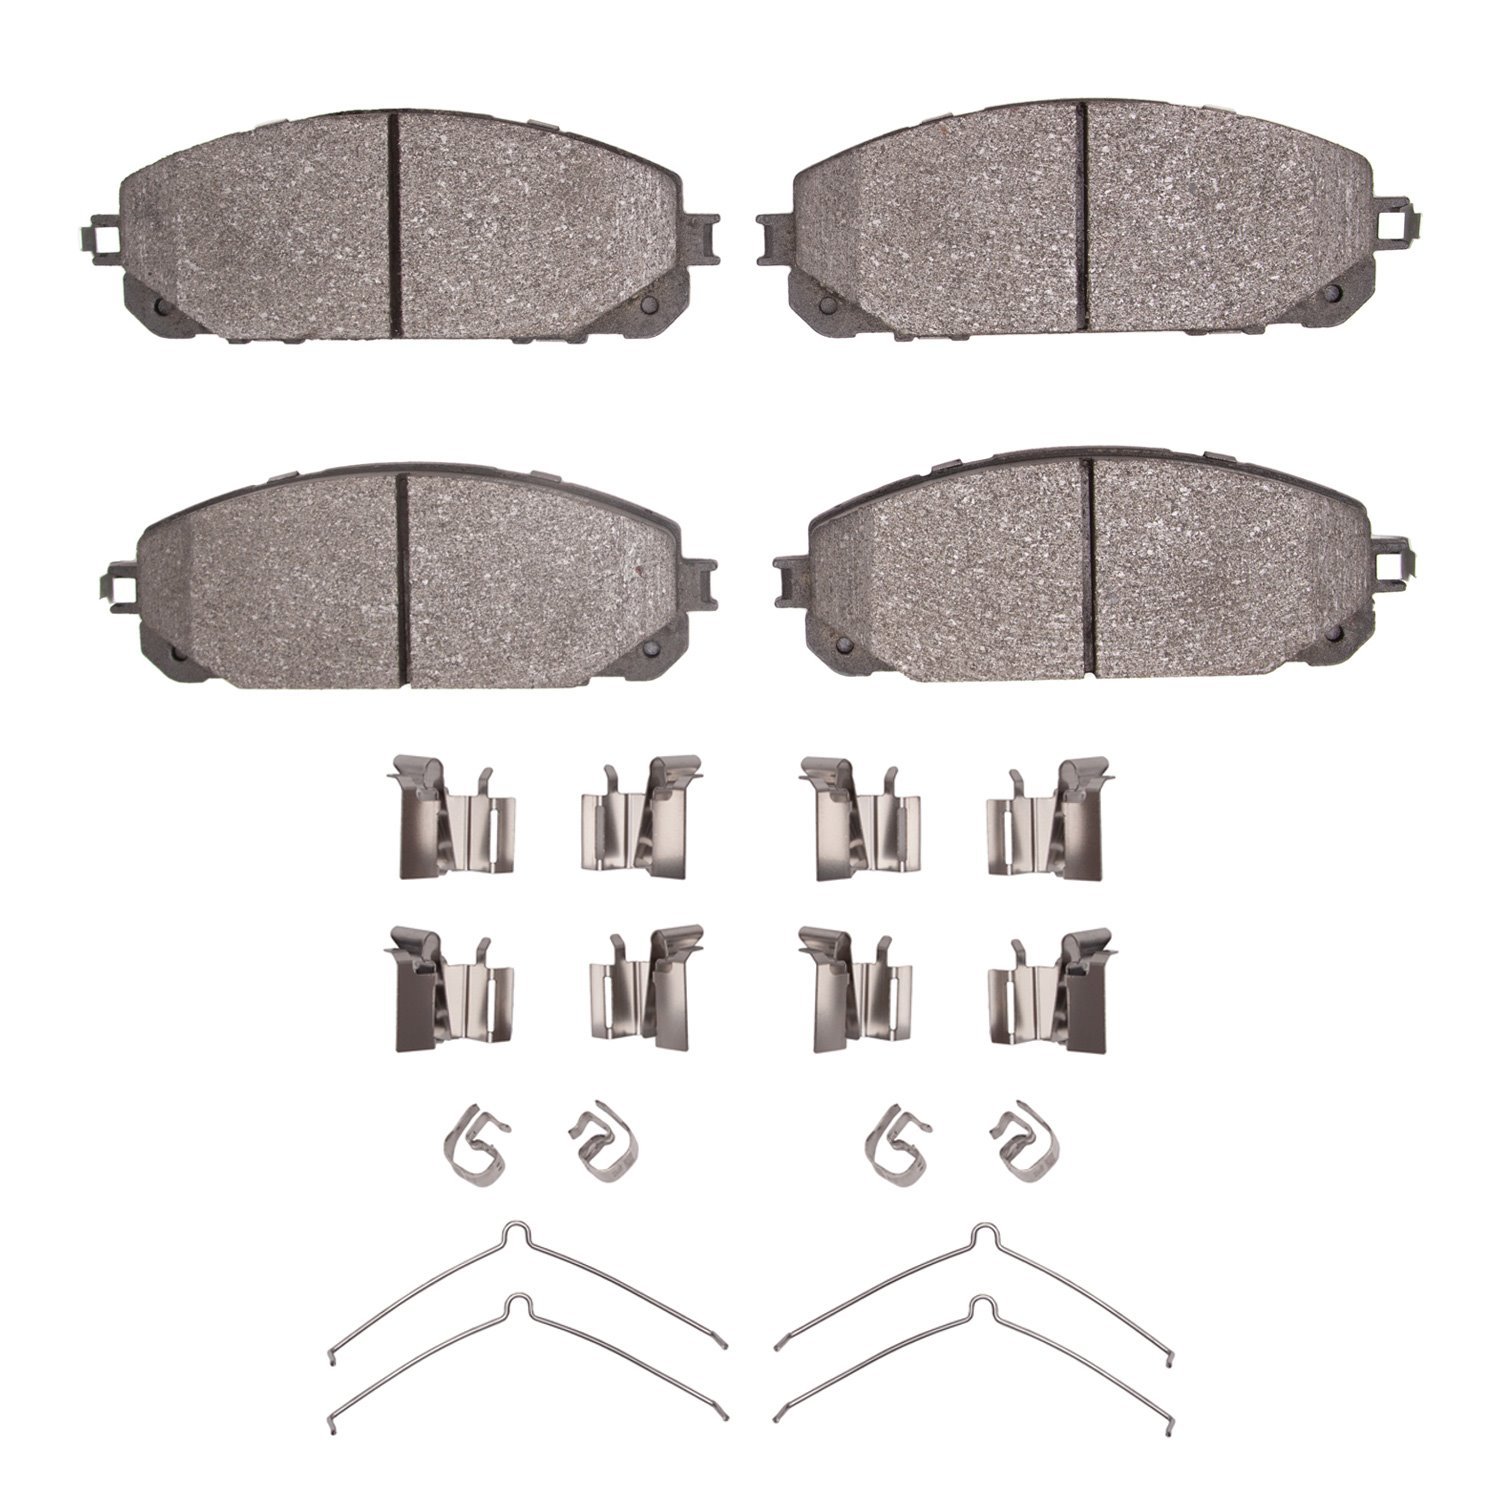 Euro Ceramic Brake Pads & Hardware Kit, Fits Select Mopar, Position: Front